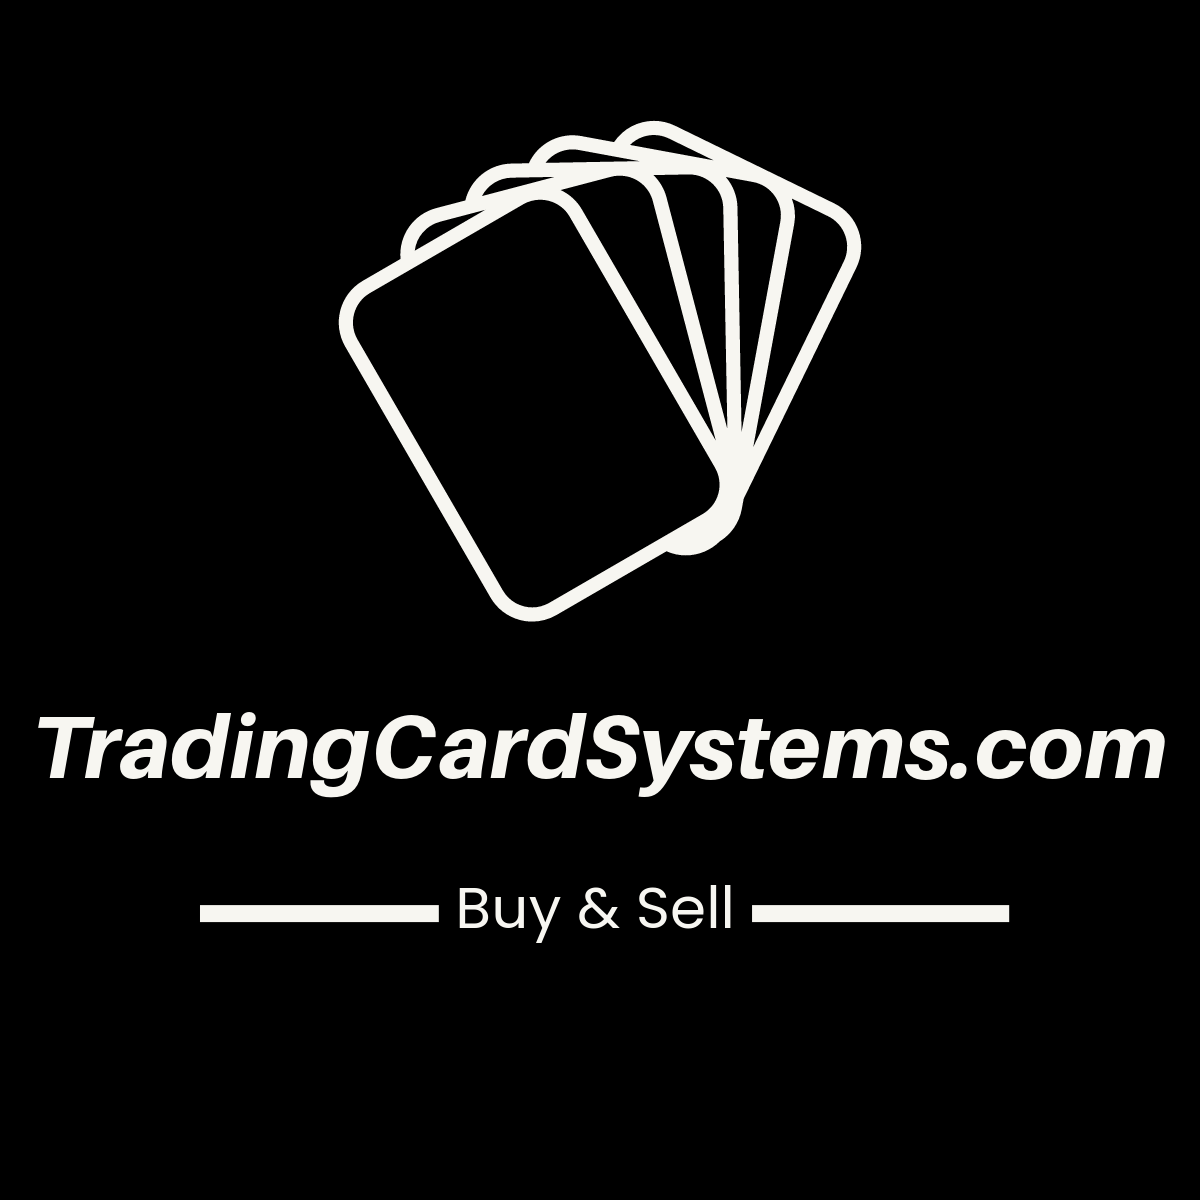 TradingCardSystems.com